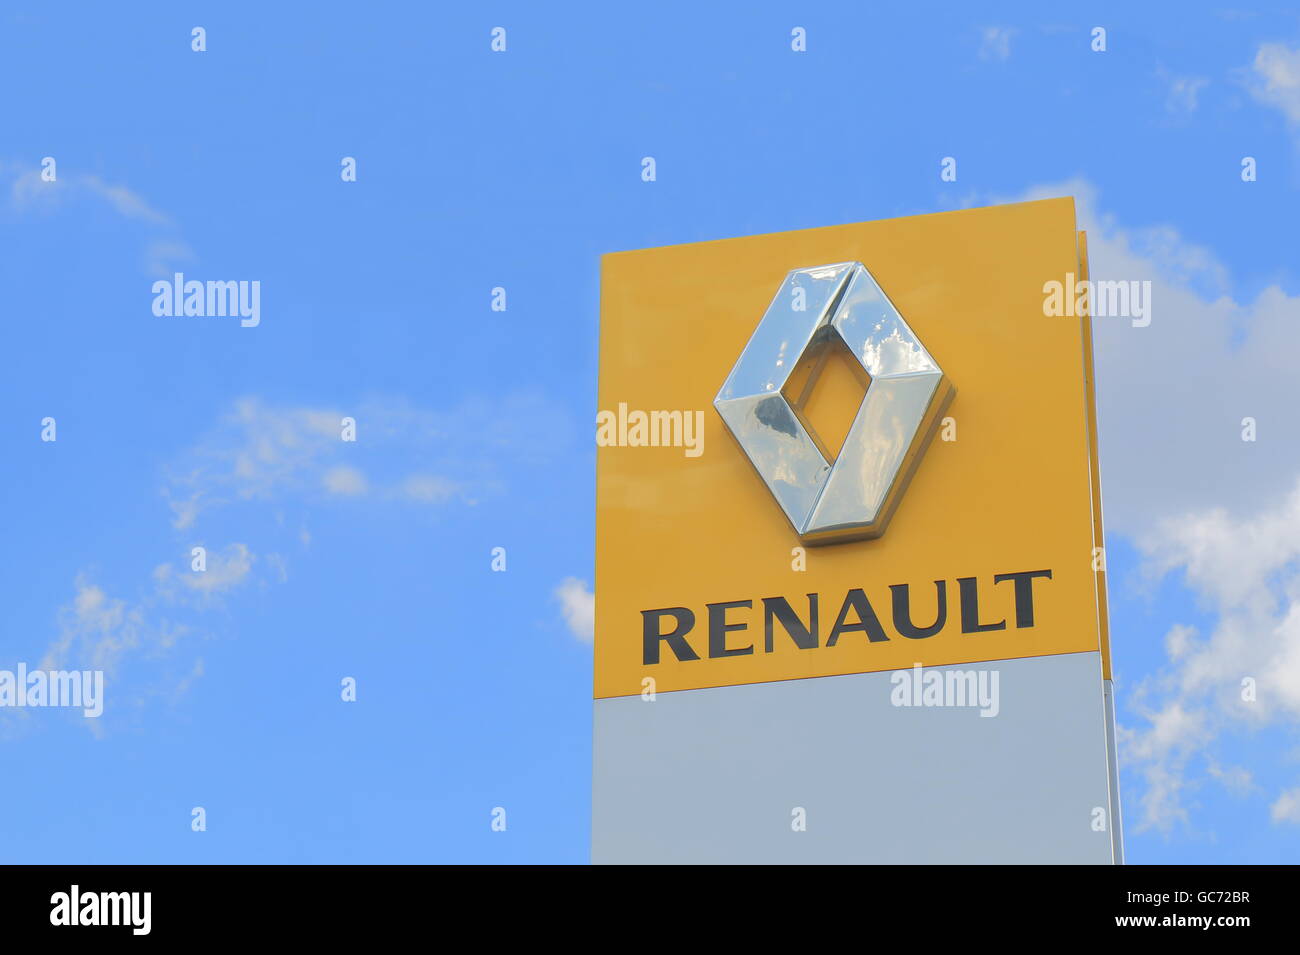 RENAULT car manufacture company logo Stock Photo